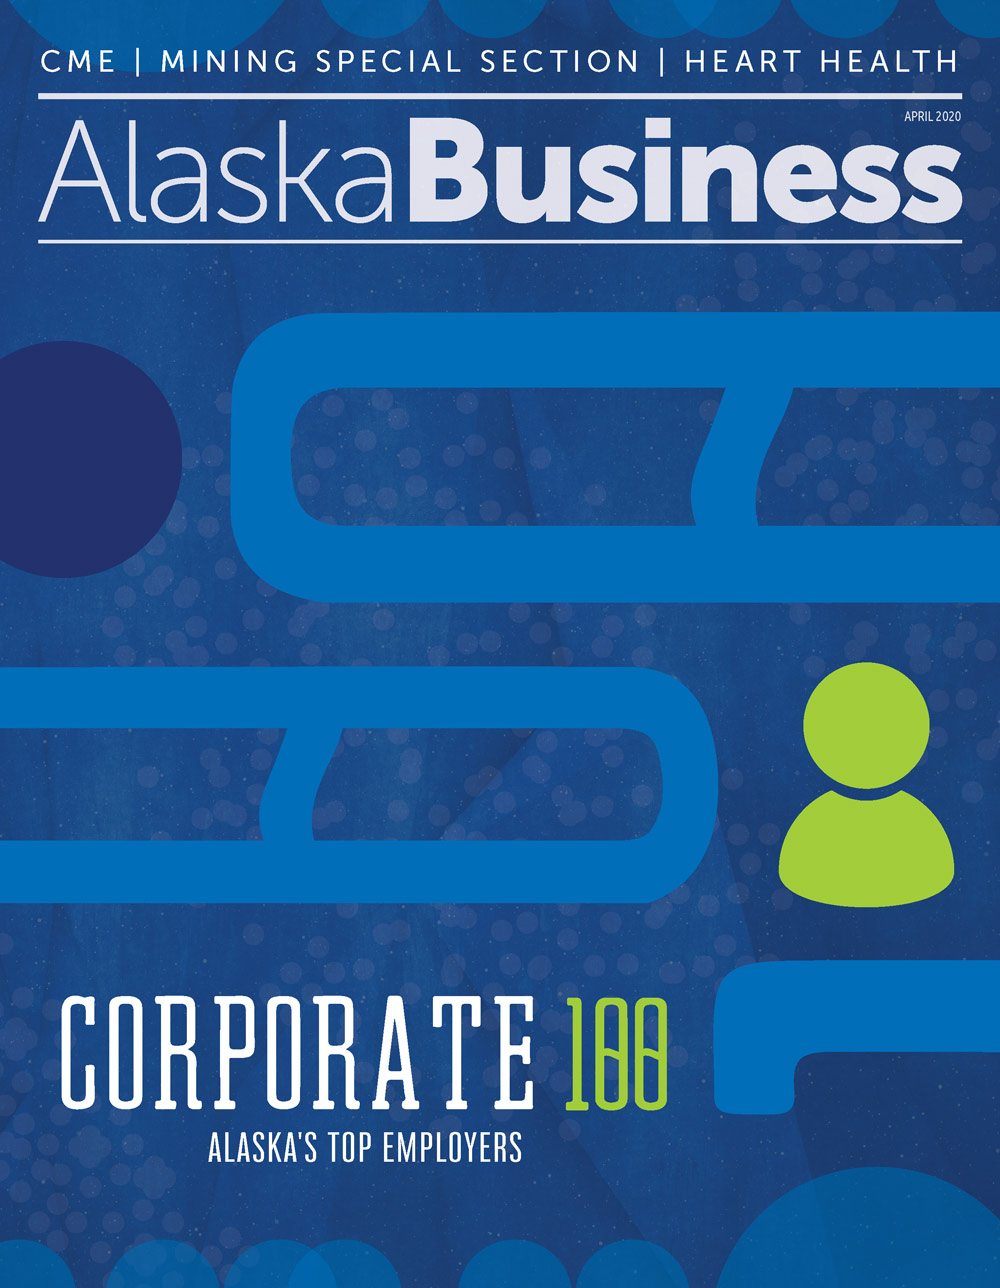 Alaska Business April 2020 cover